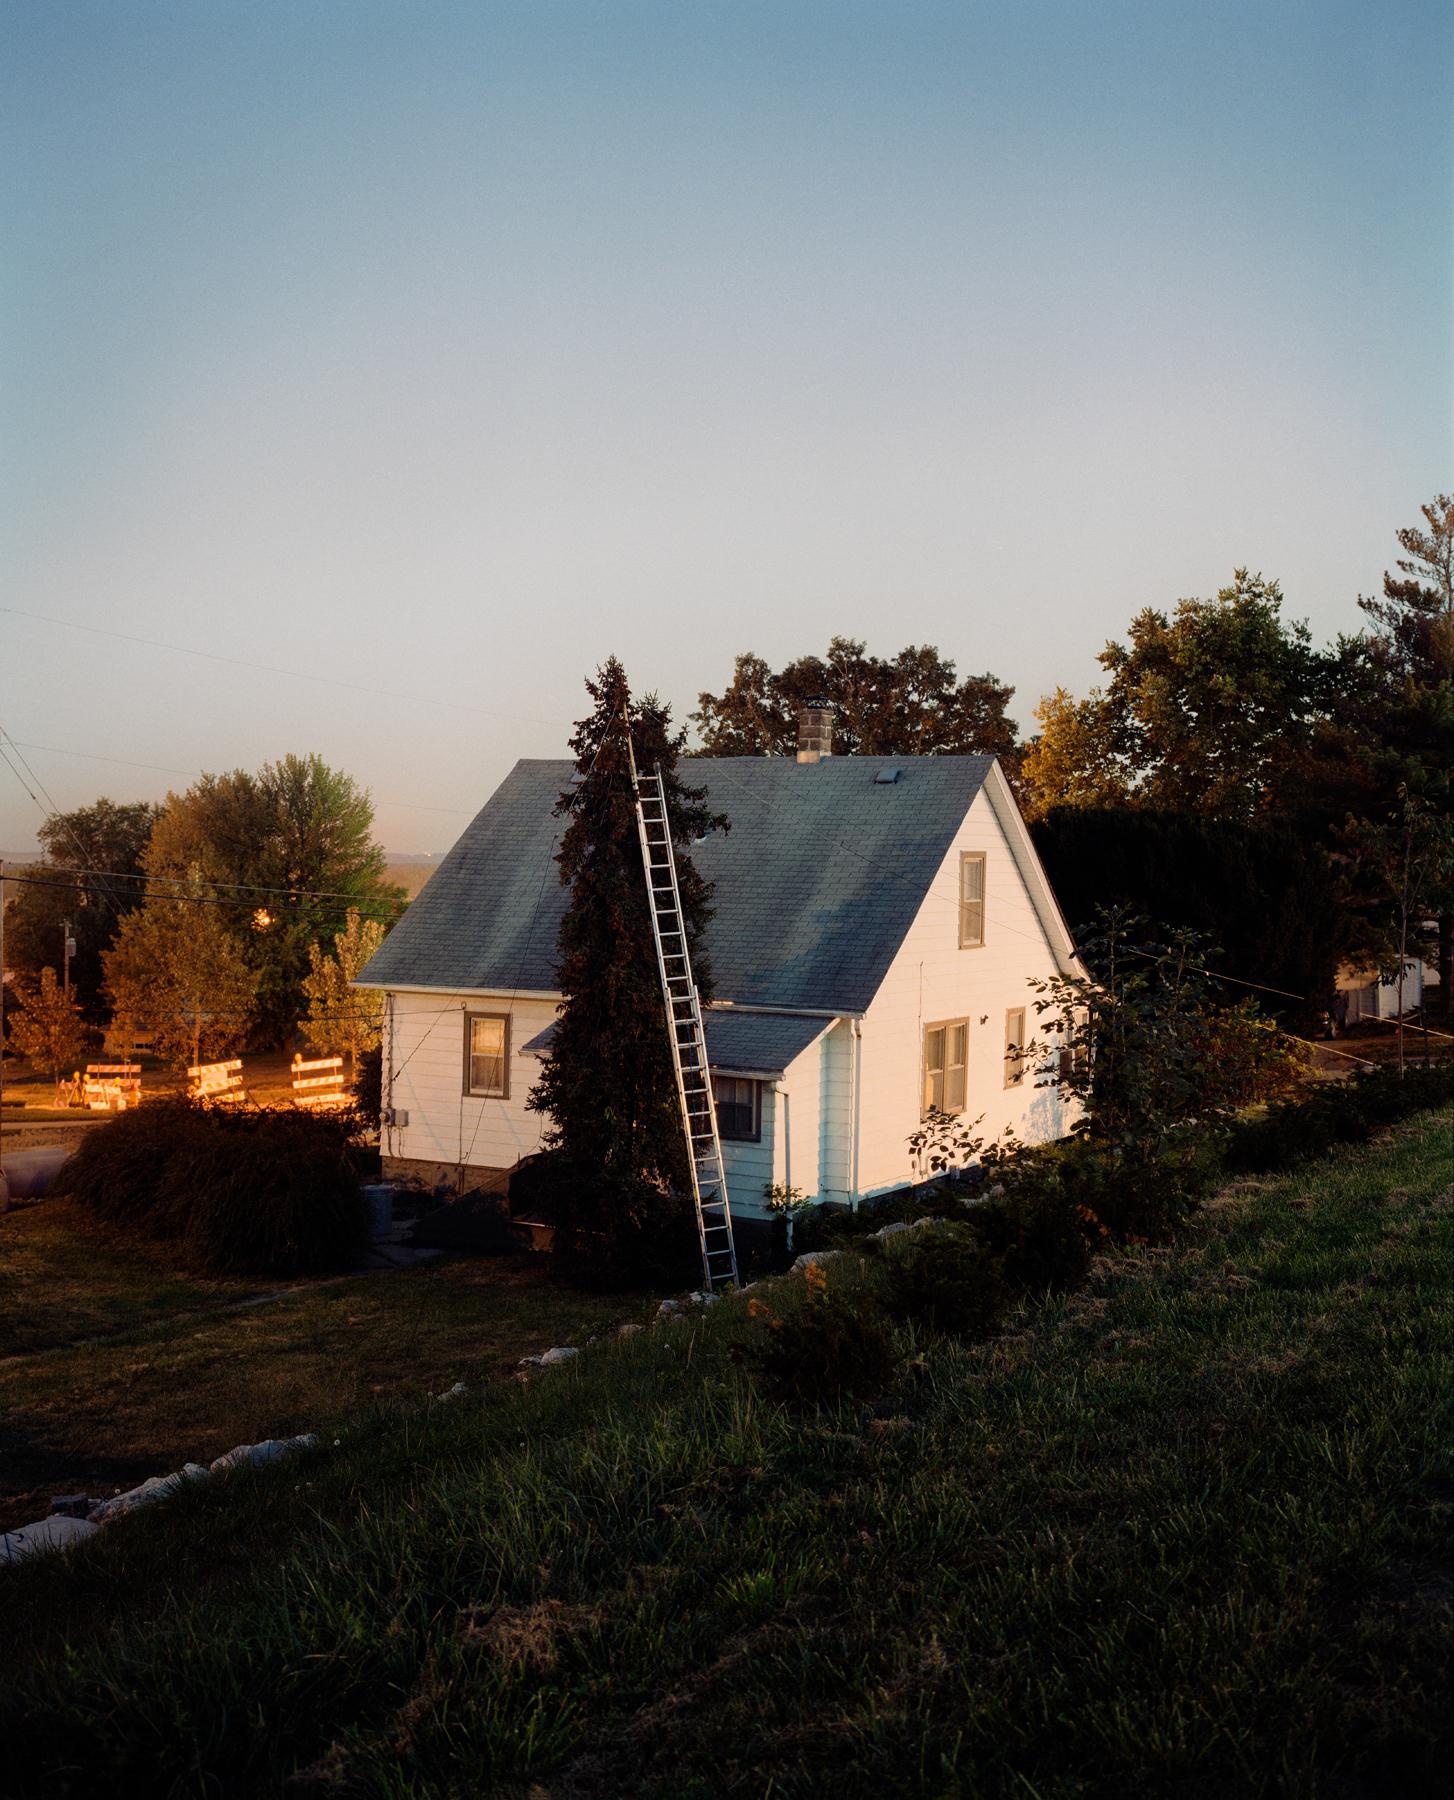 Color Photograph Gregory Halpern - Livre de croquis d'Omaha : Ladder and House, Omaha, NE - Photographie contemporaine